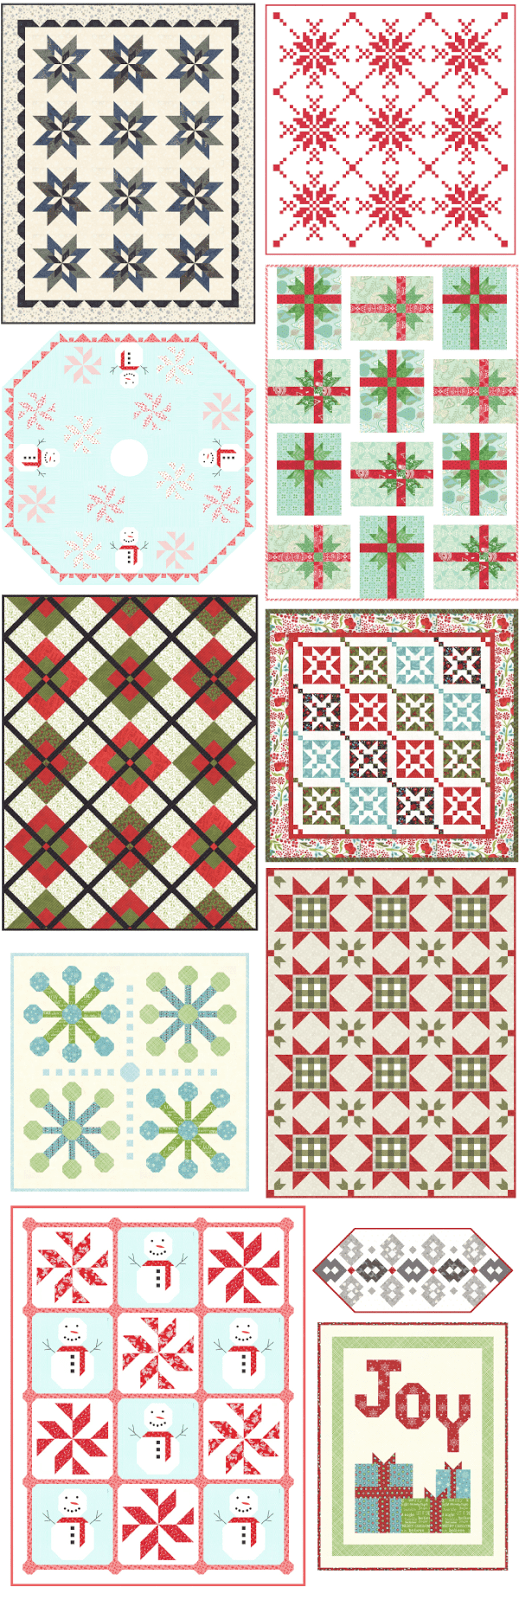  It's Sew Emma Homemade Holiday Pattern Book : Sherri Falls:  Arts, Crafts & Sewing